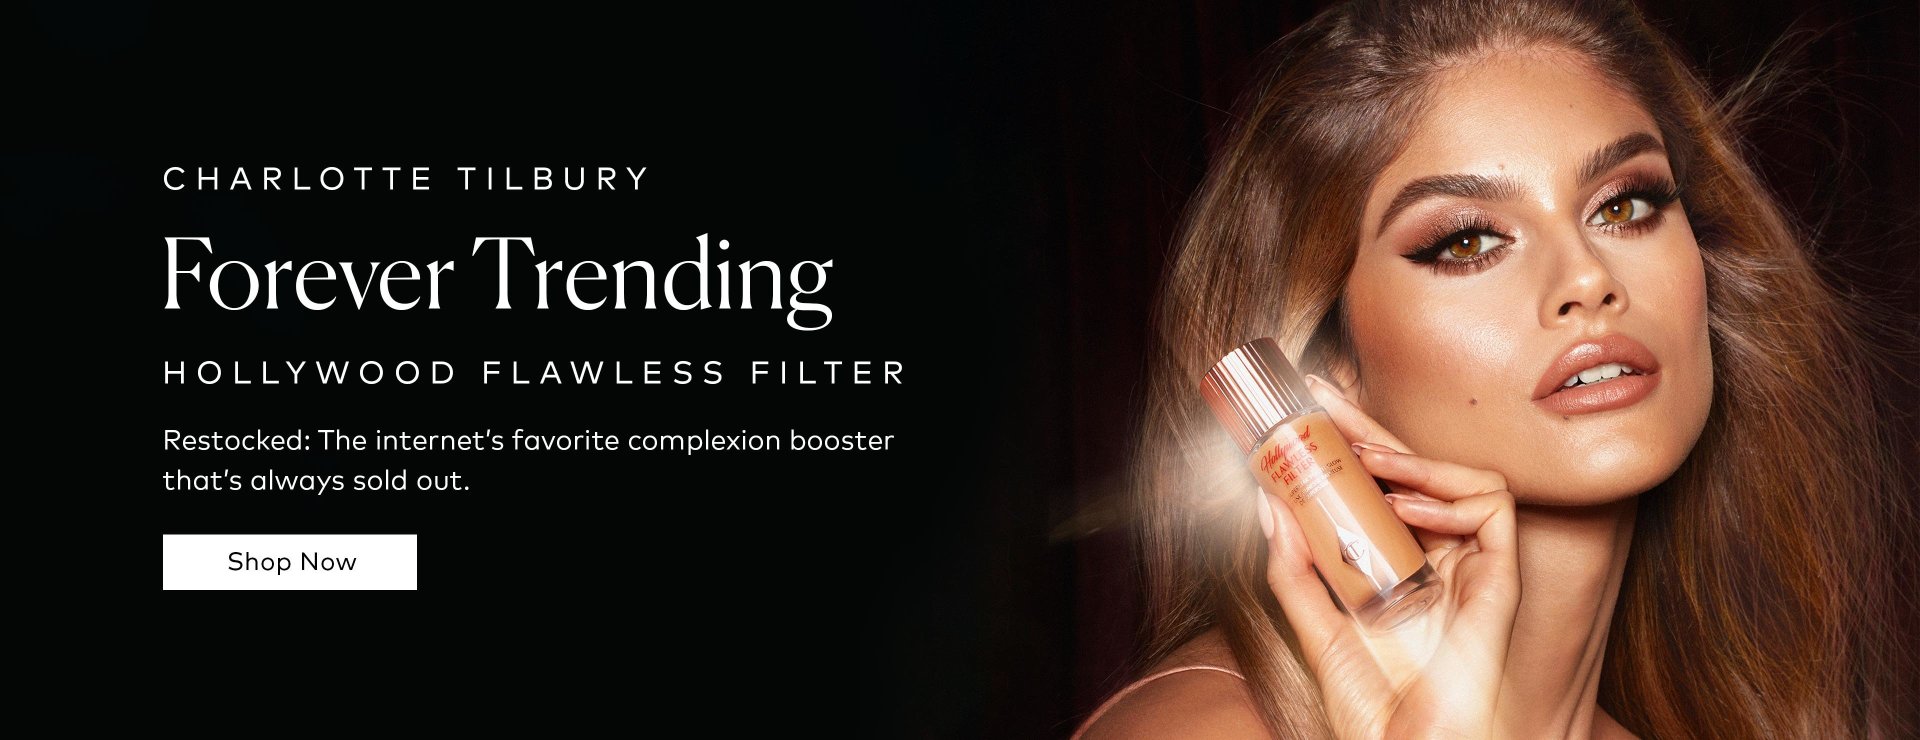 Shop Charlotte Tilbury's Hollywood Flawless Filter on Beautylish.com